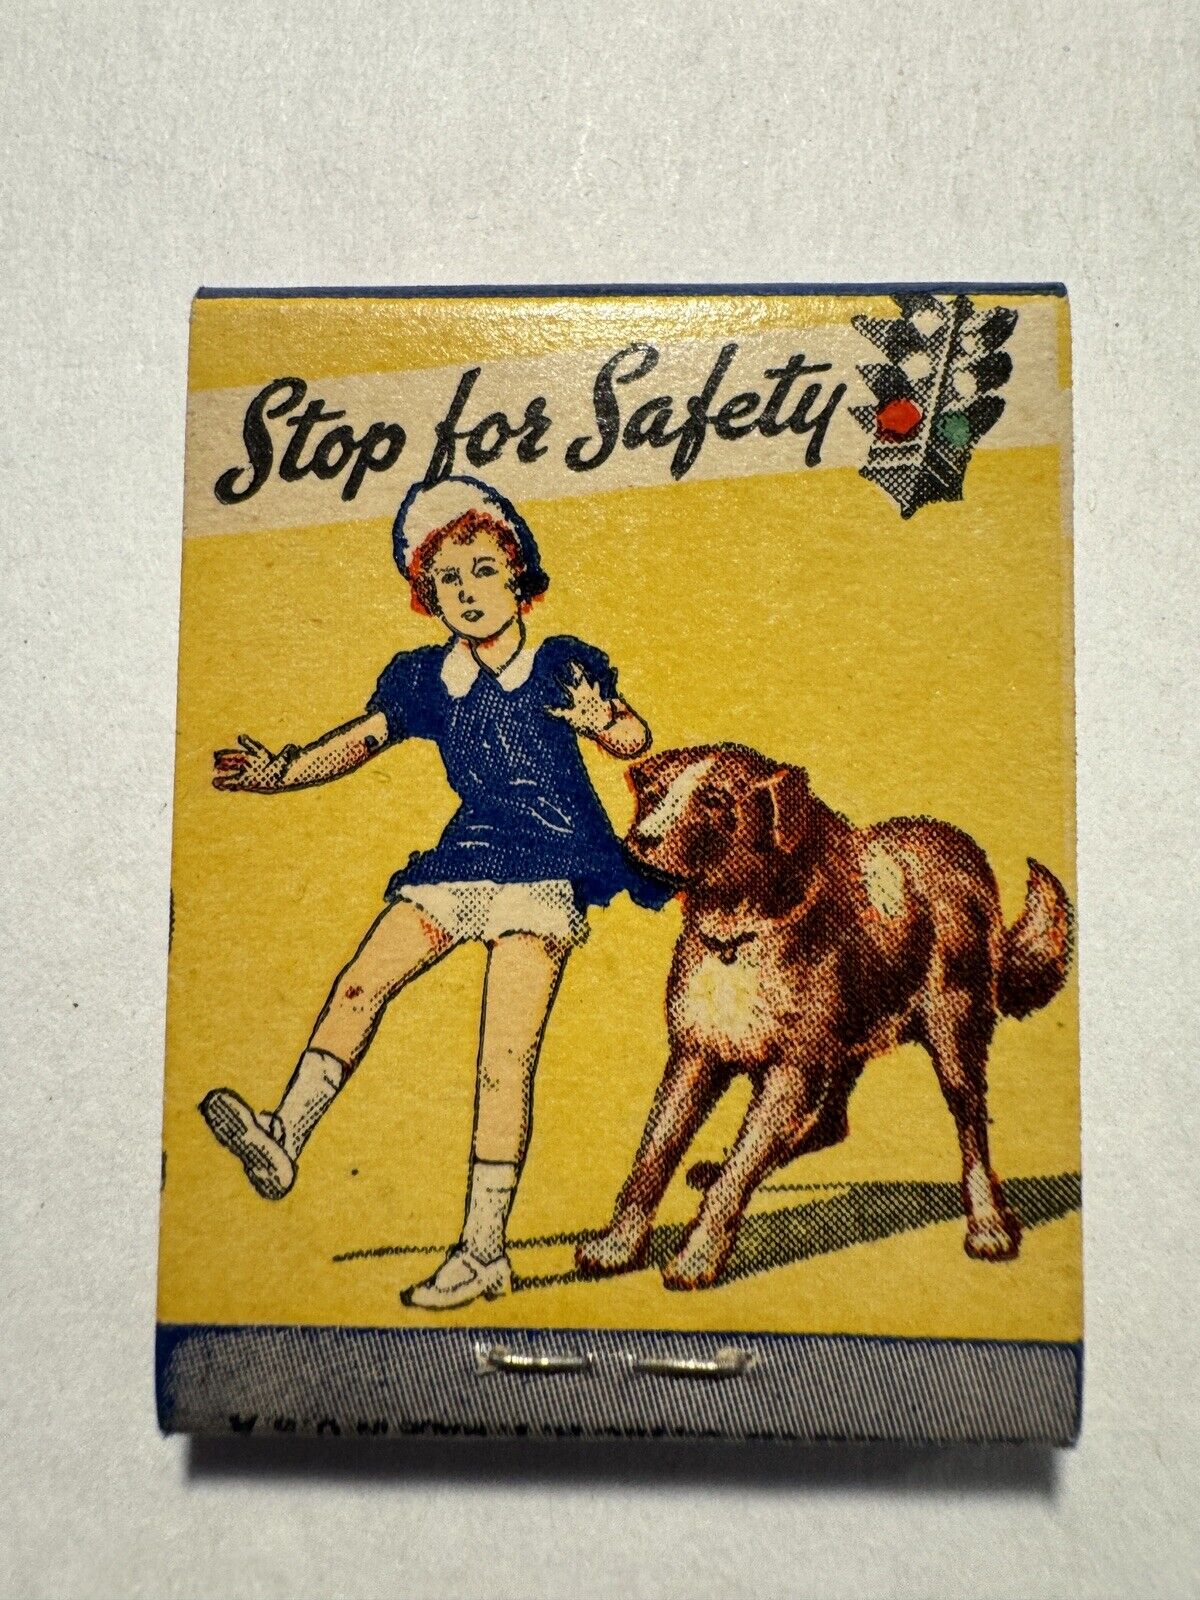 TYDOL GASOLINE - Stop For Safety - Portland, Maine - Feature Matchbook Unstruck